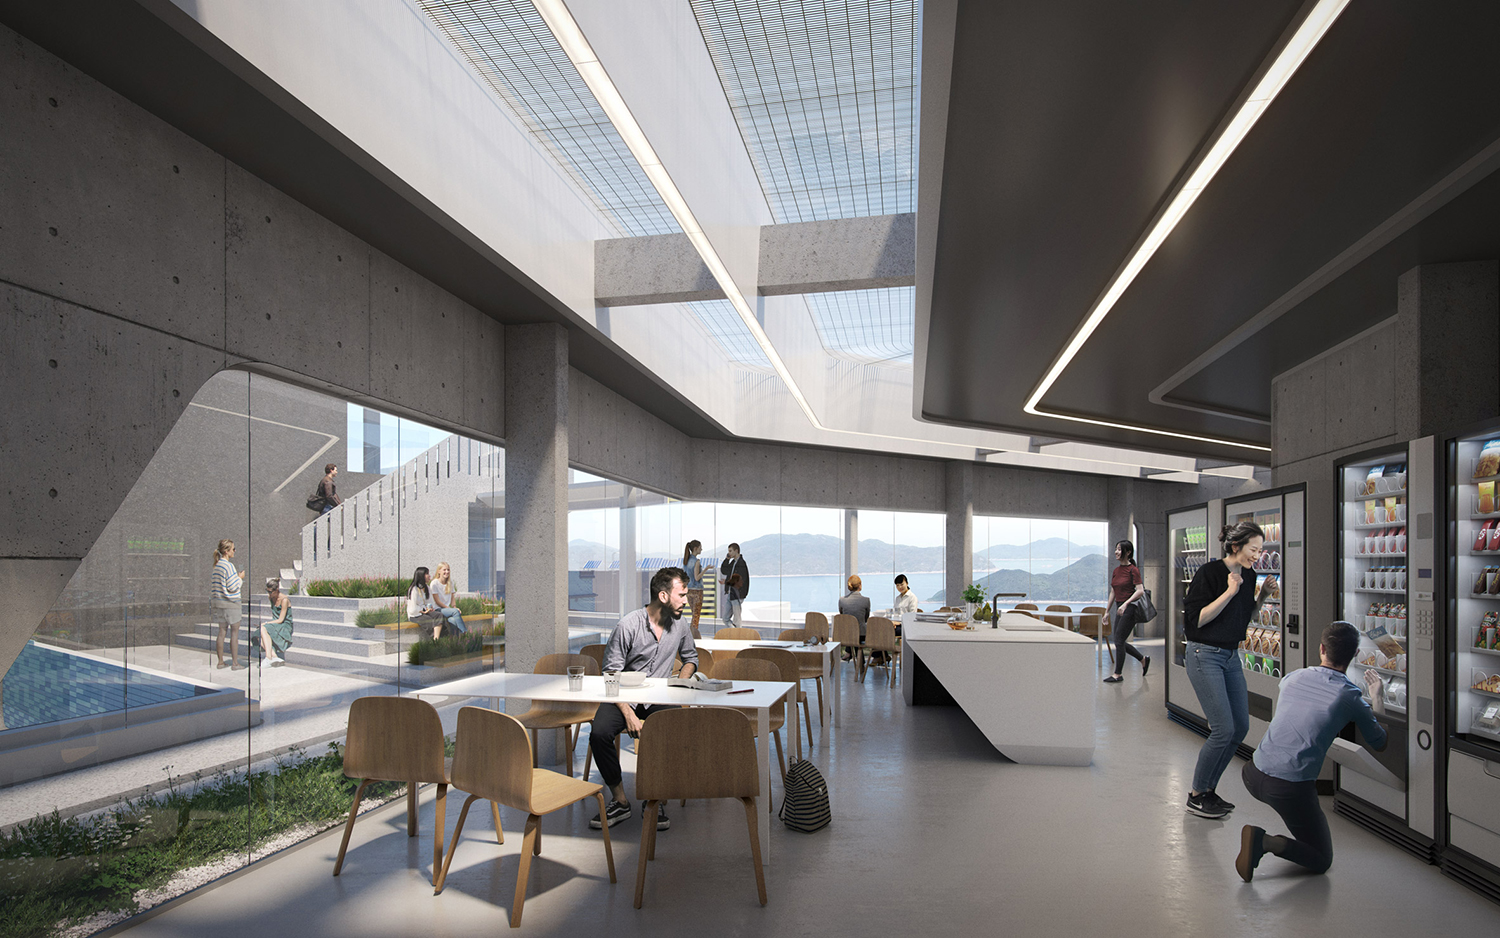 Student Residence Development at HKUST / Zaha Hadid Architects + Leigh & Orange